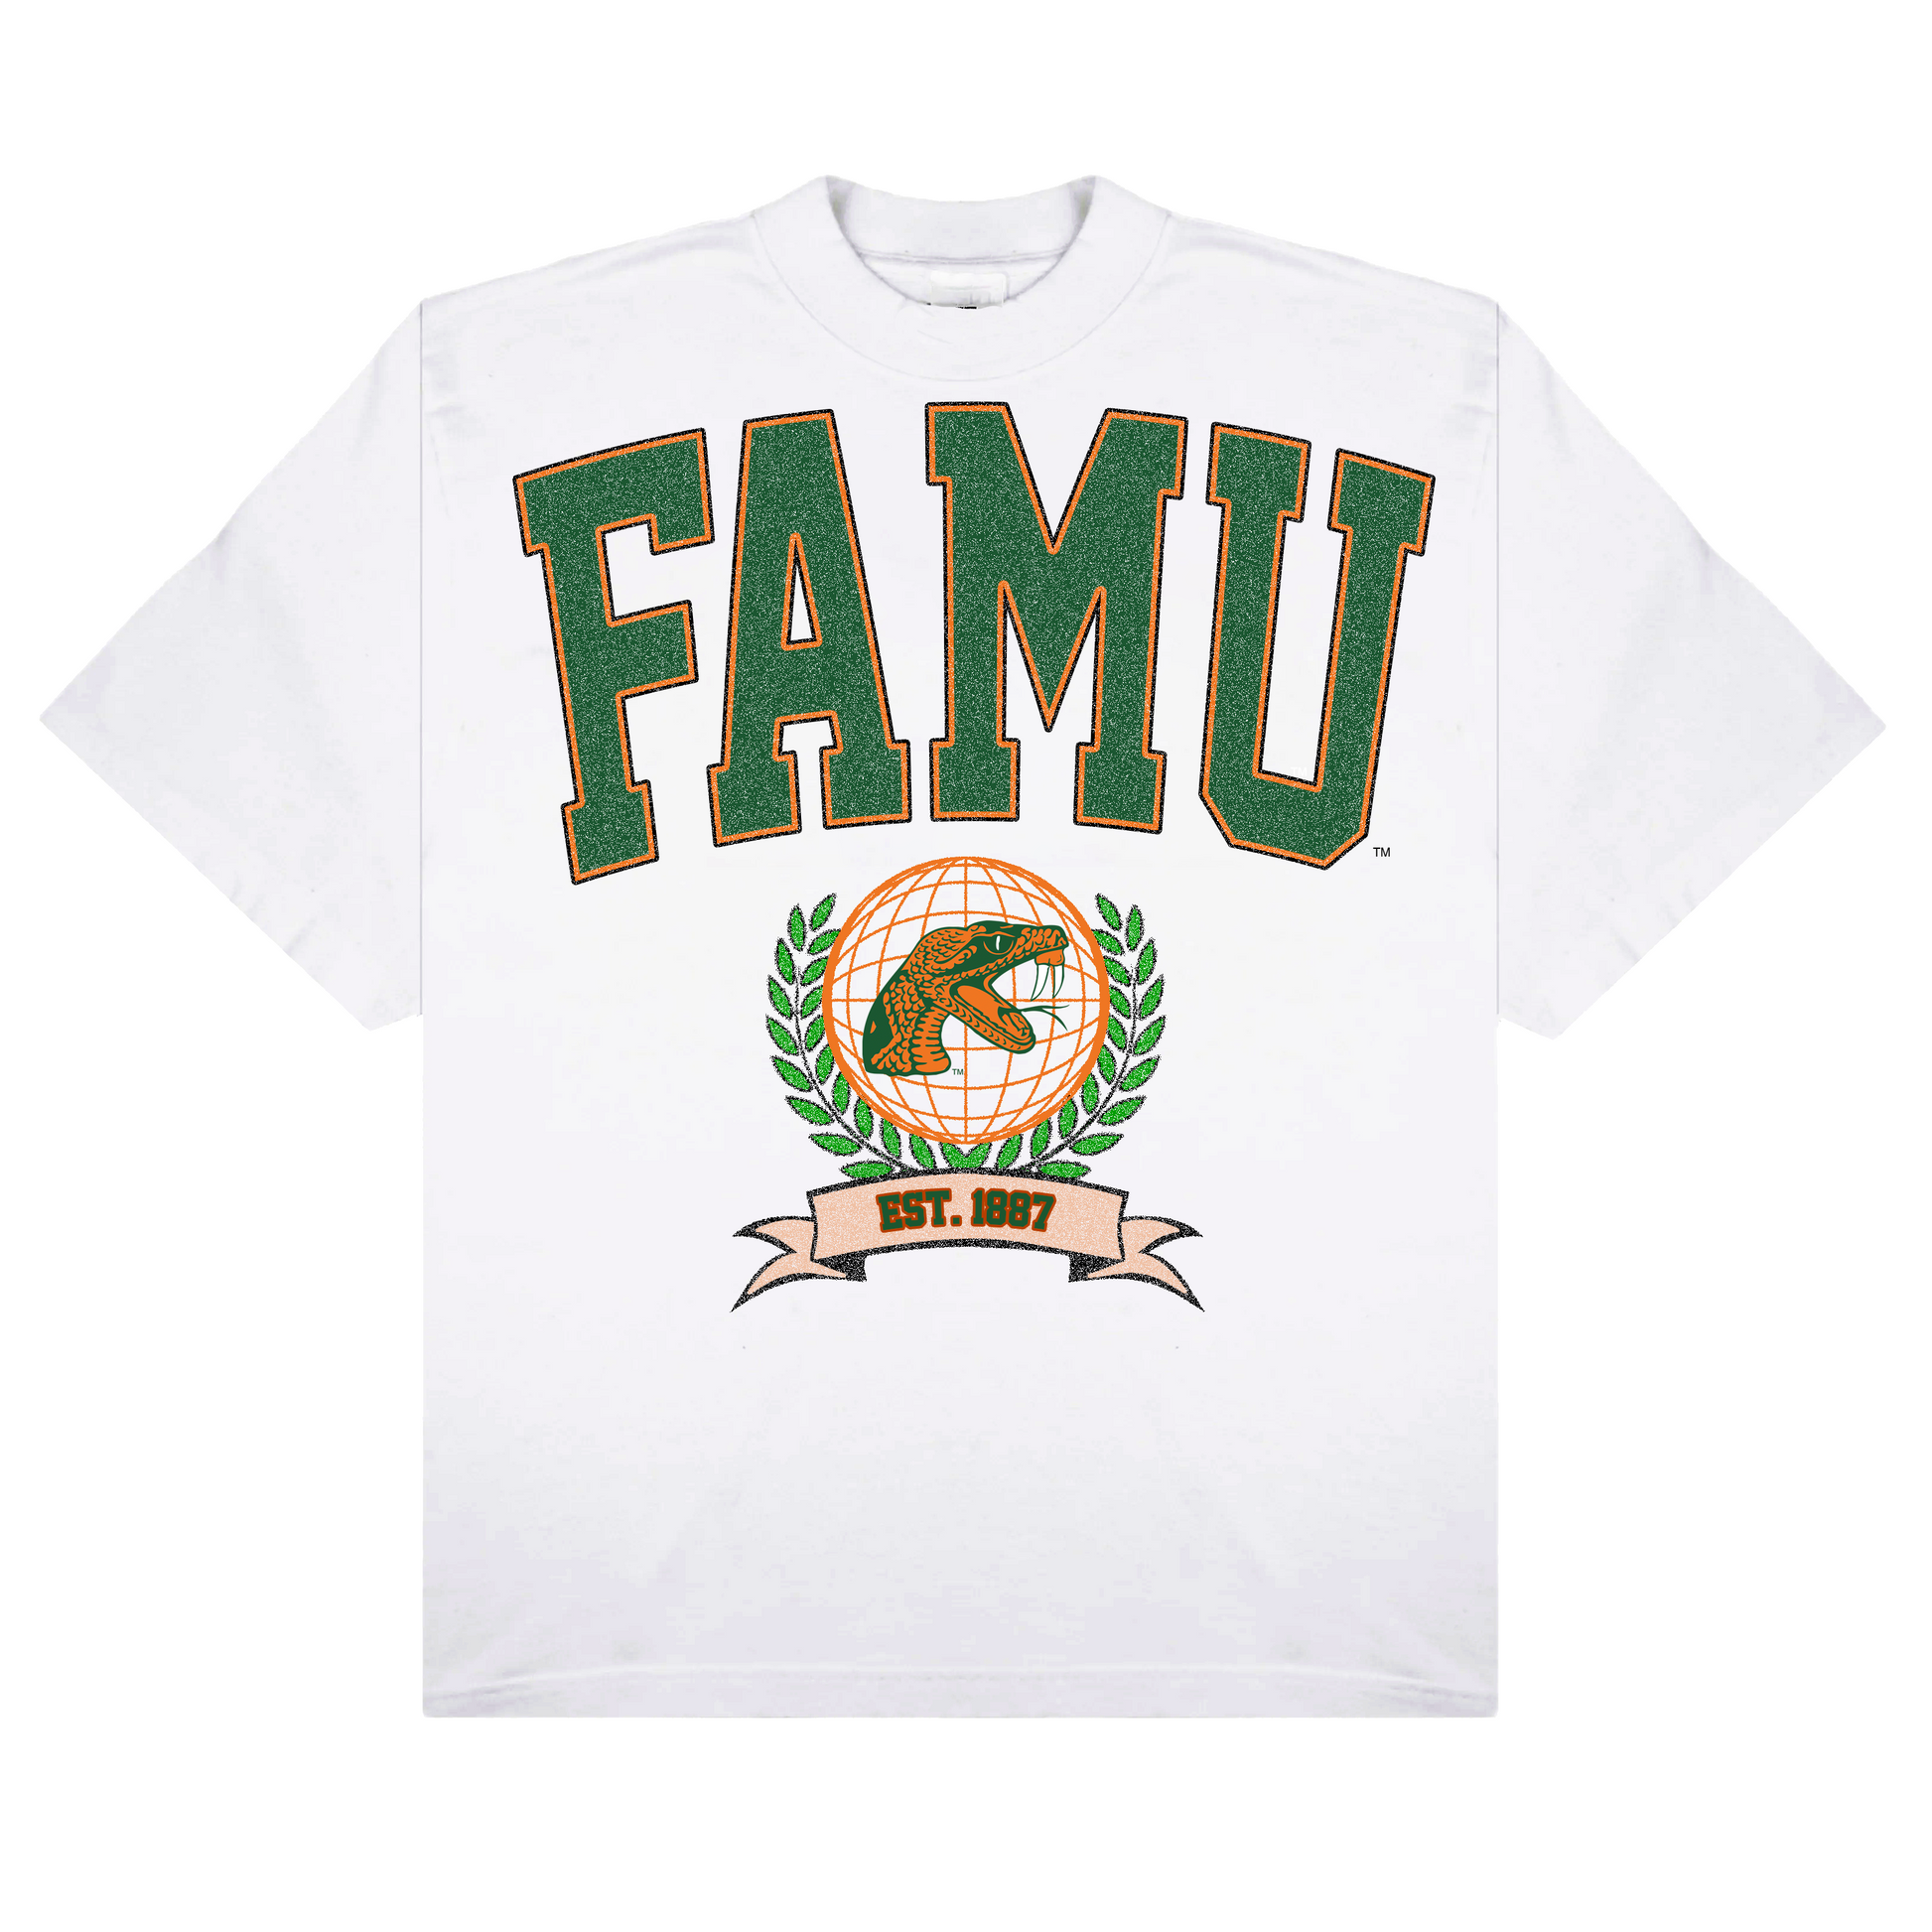 Florida A&M T-shirt - FAMU Apparel and Clothing - 1921 movement